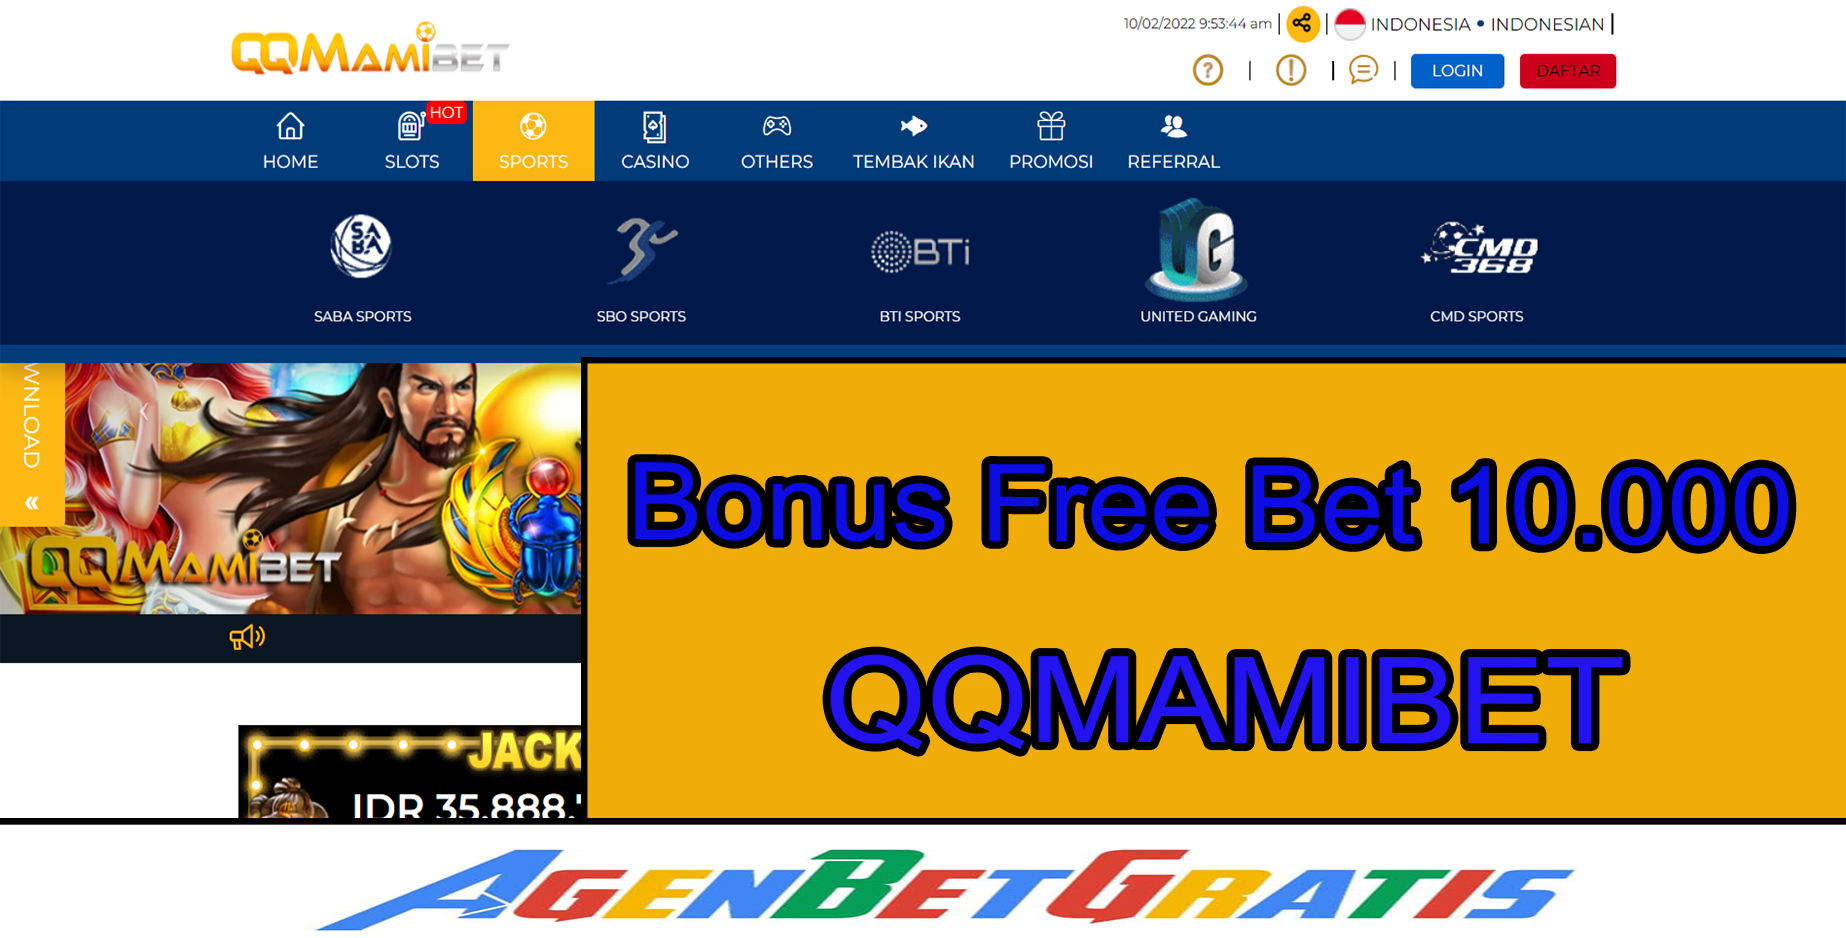 QQMAMIBET - Bonus FreeBet 10.000